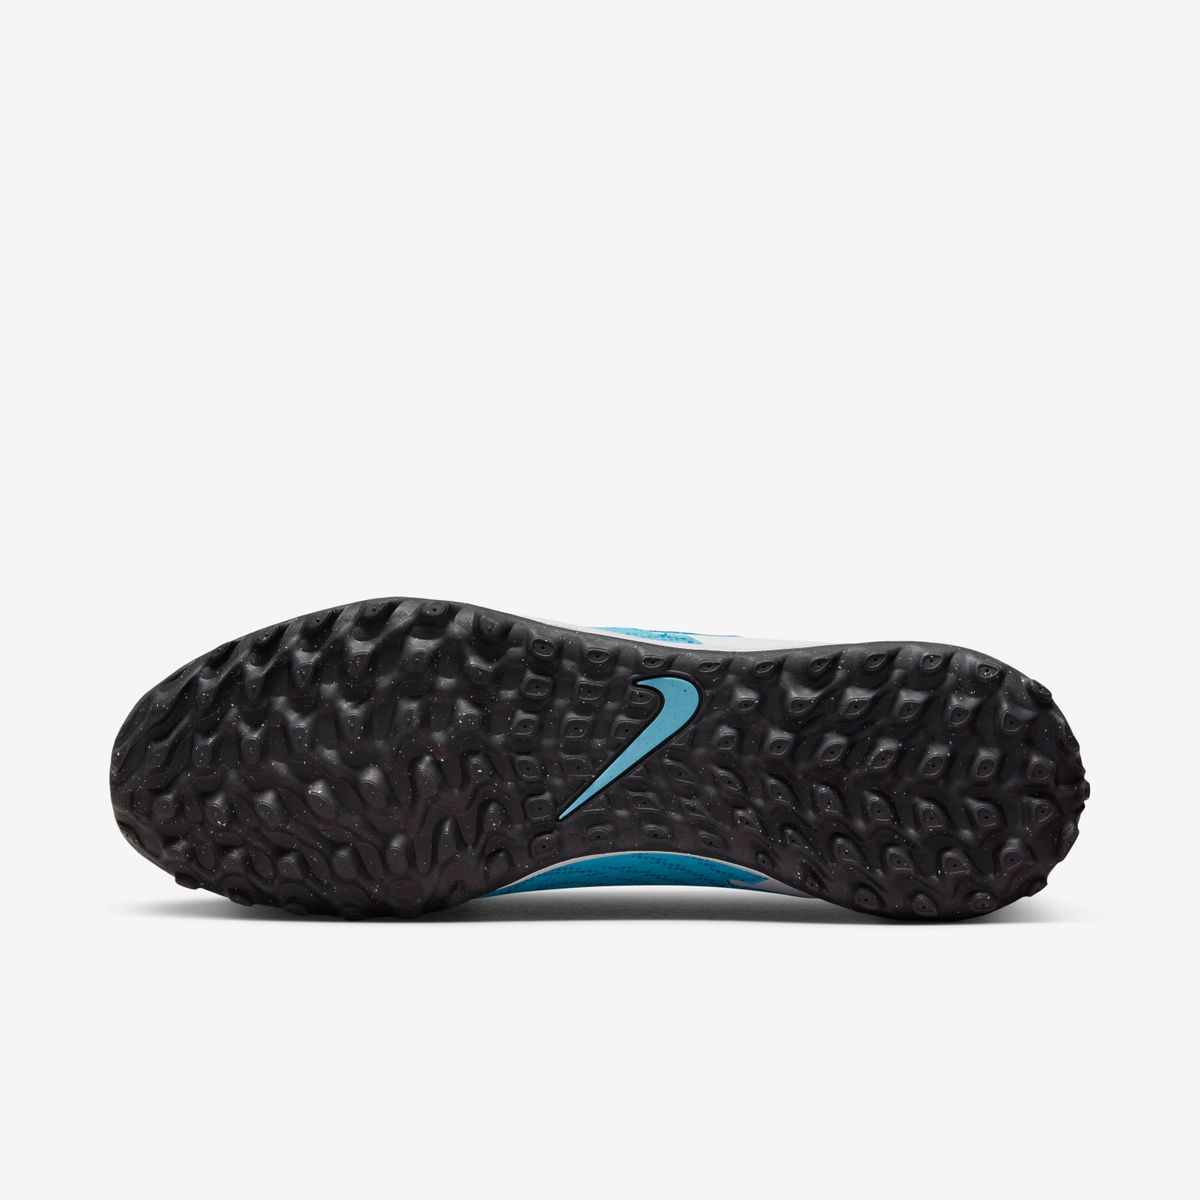 Zapatillas Nike Celeste